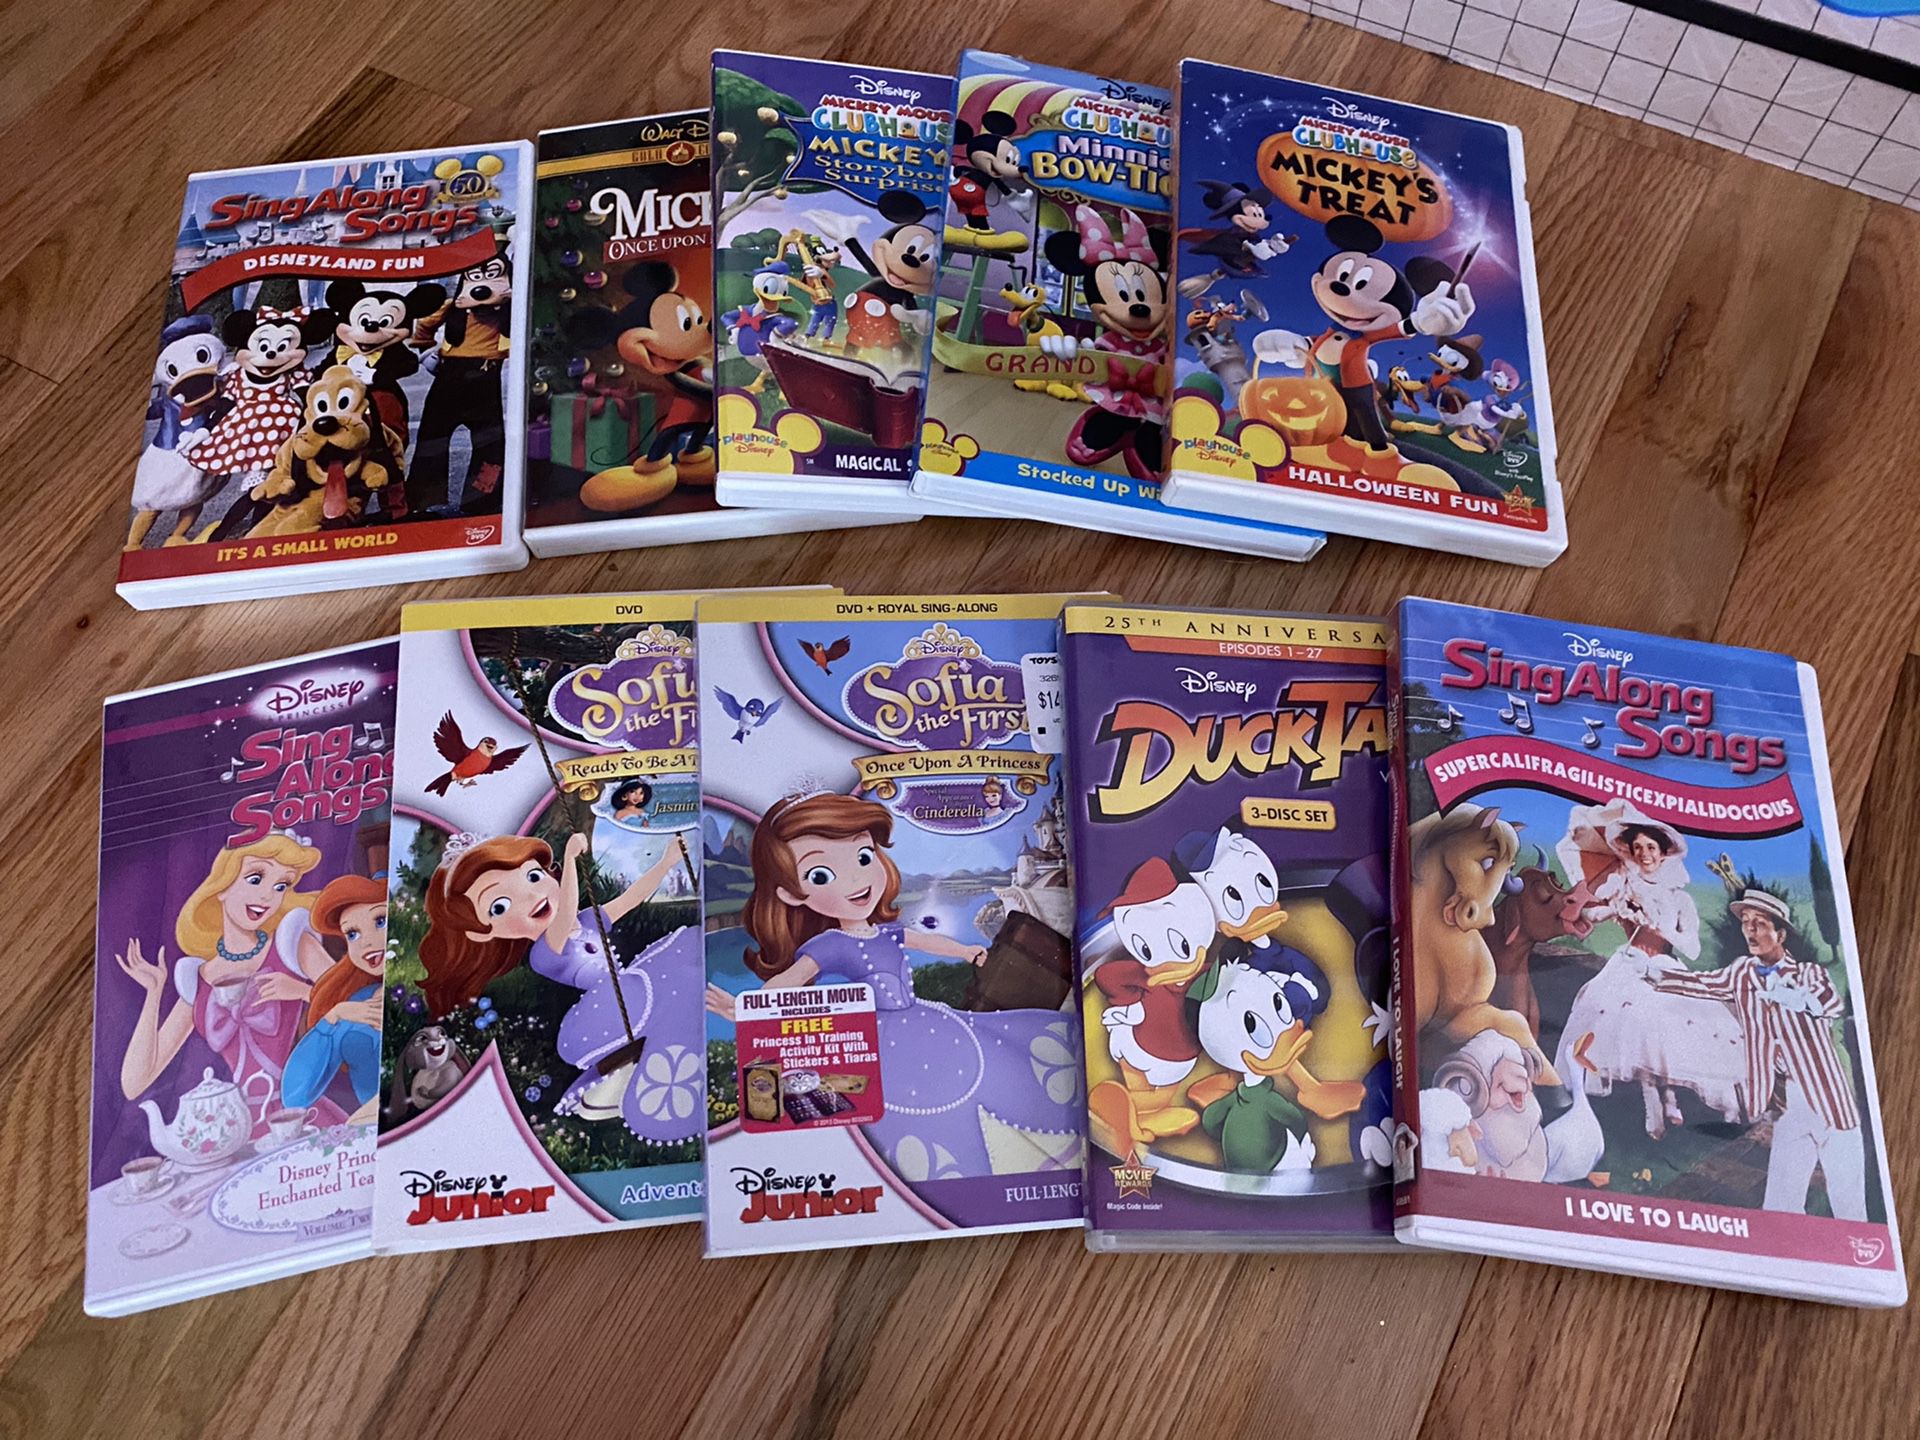 Disney DVDs (all 10 for $24)